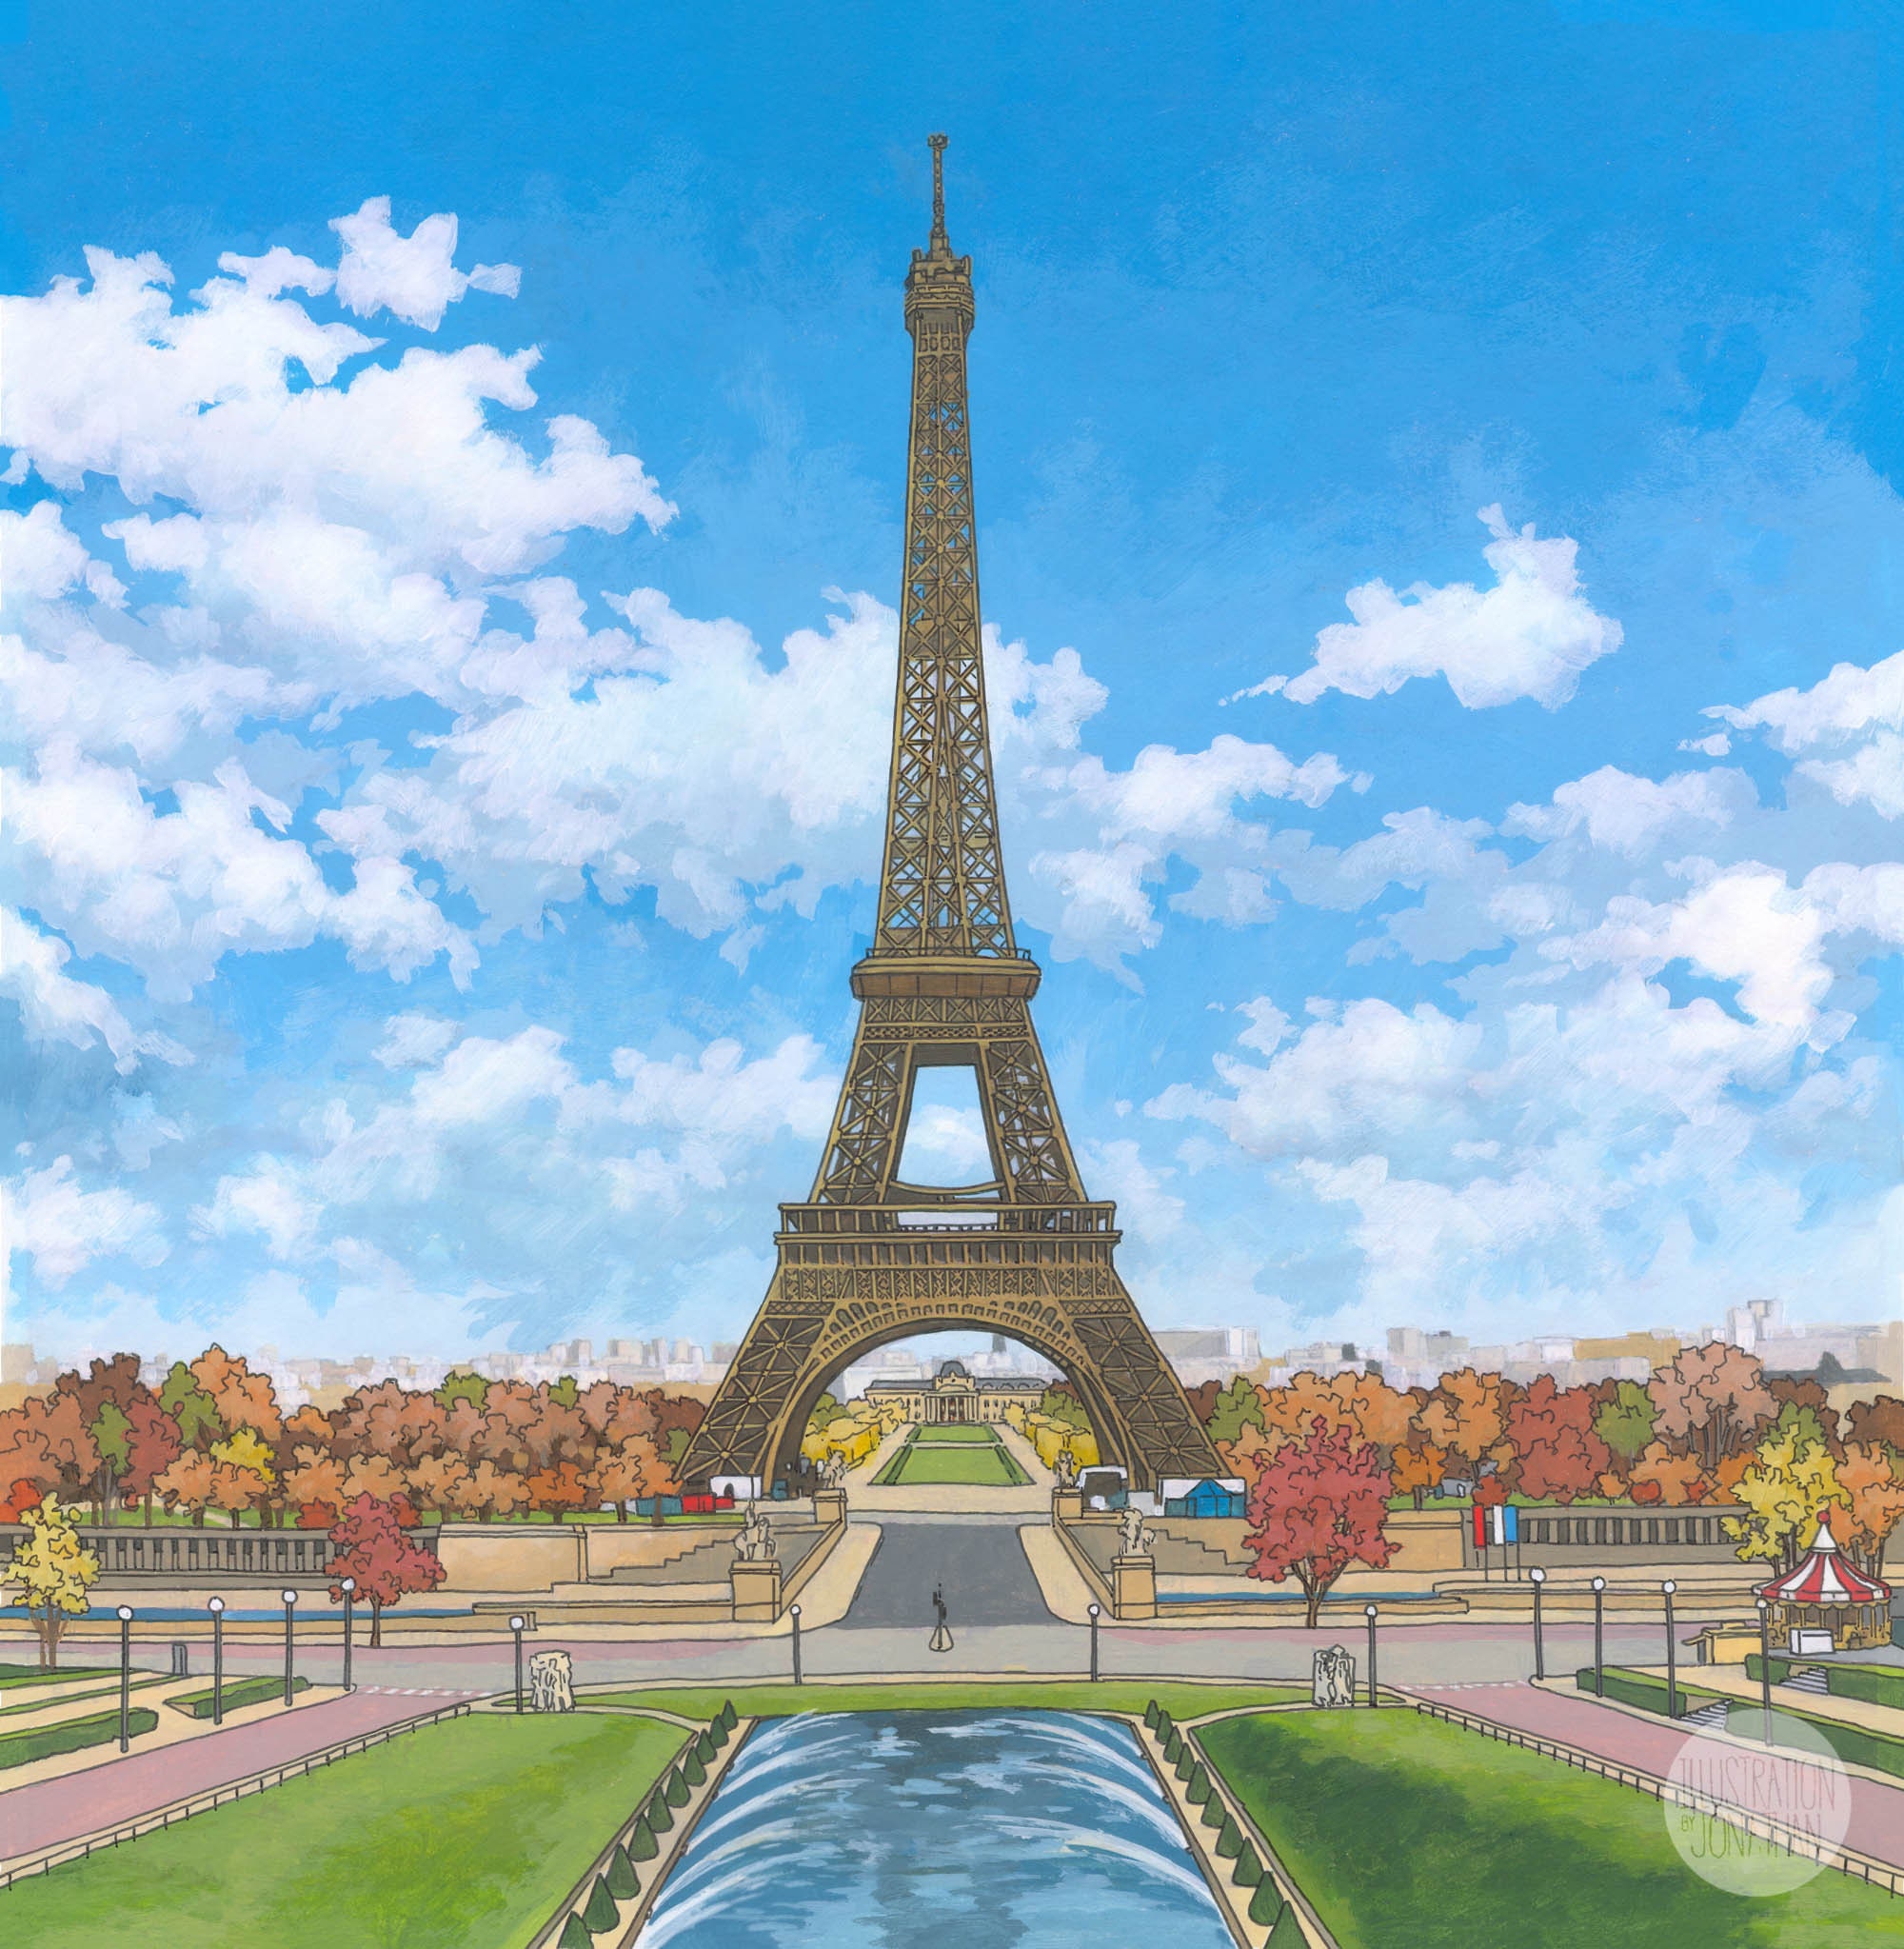 La Tour Eiffel print by euregiophoto